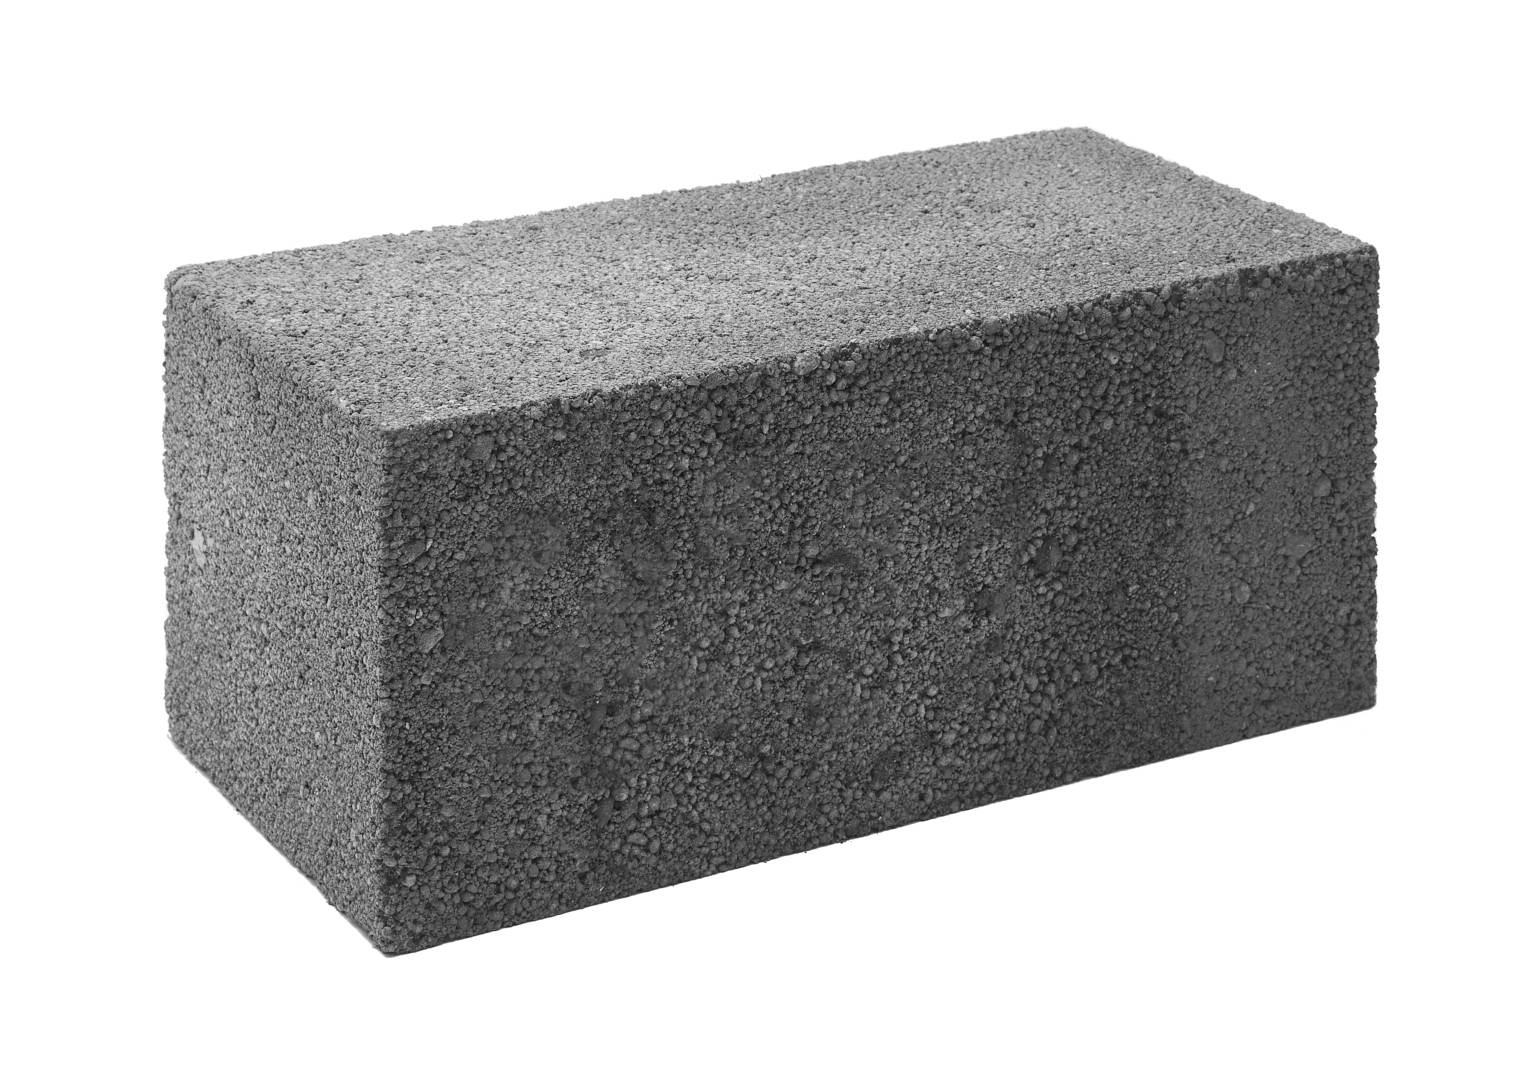 Lignalite 190 mm 7.3 N/mm² Concrete Block - Lightweight Block